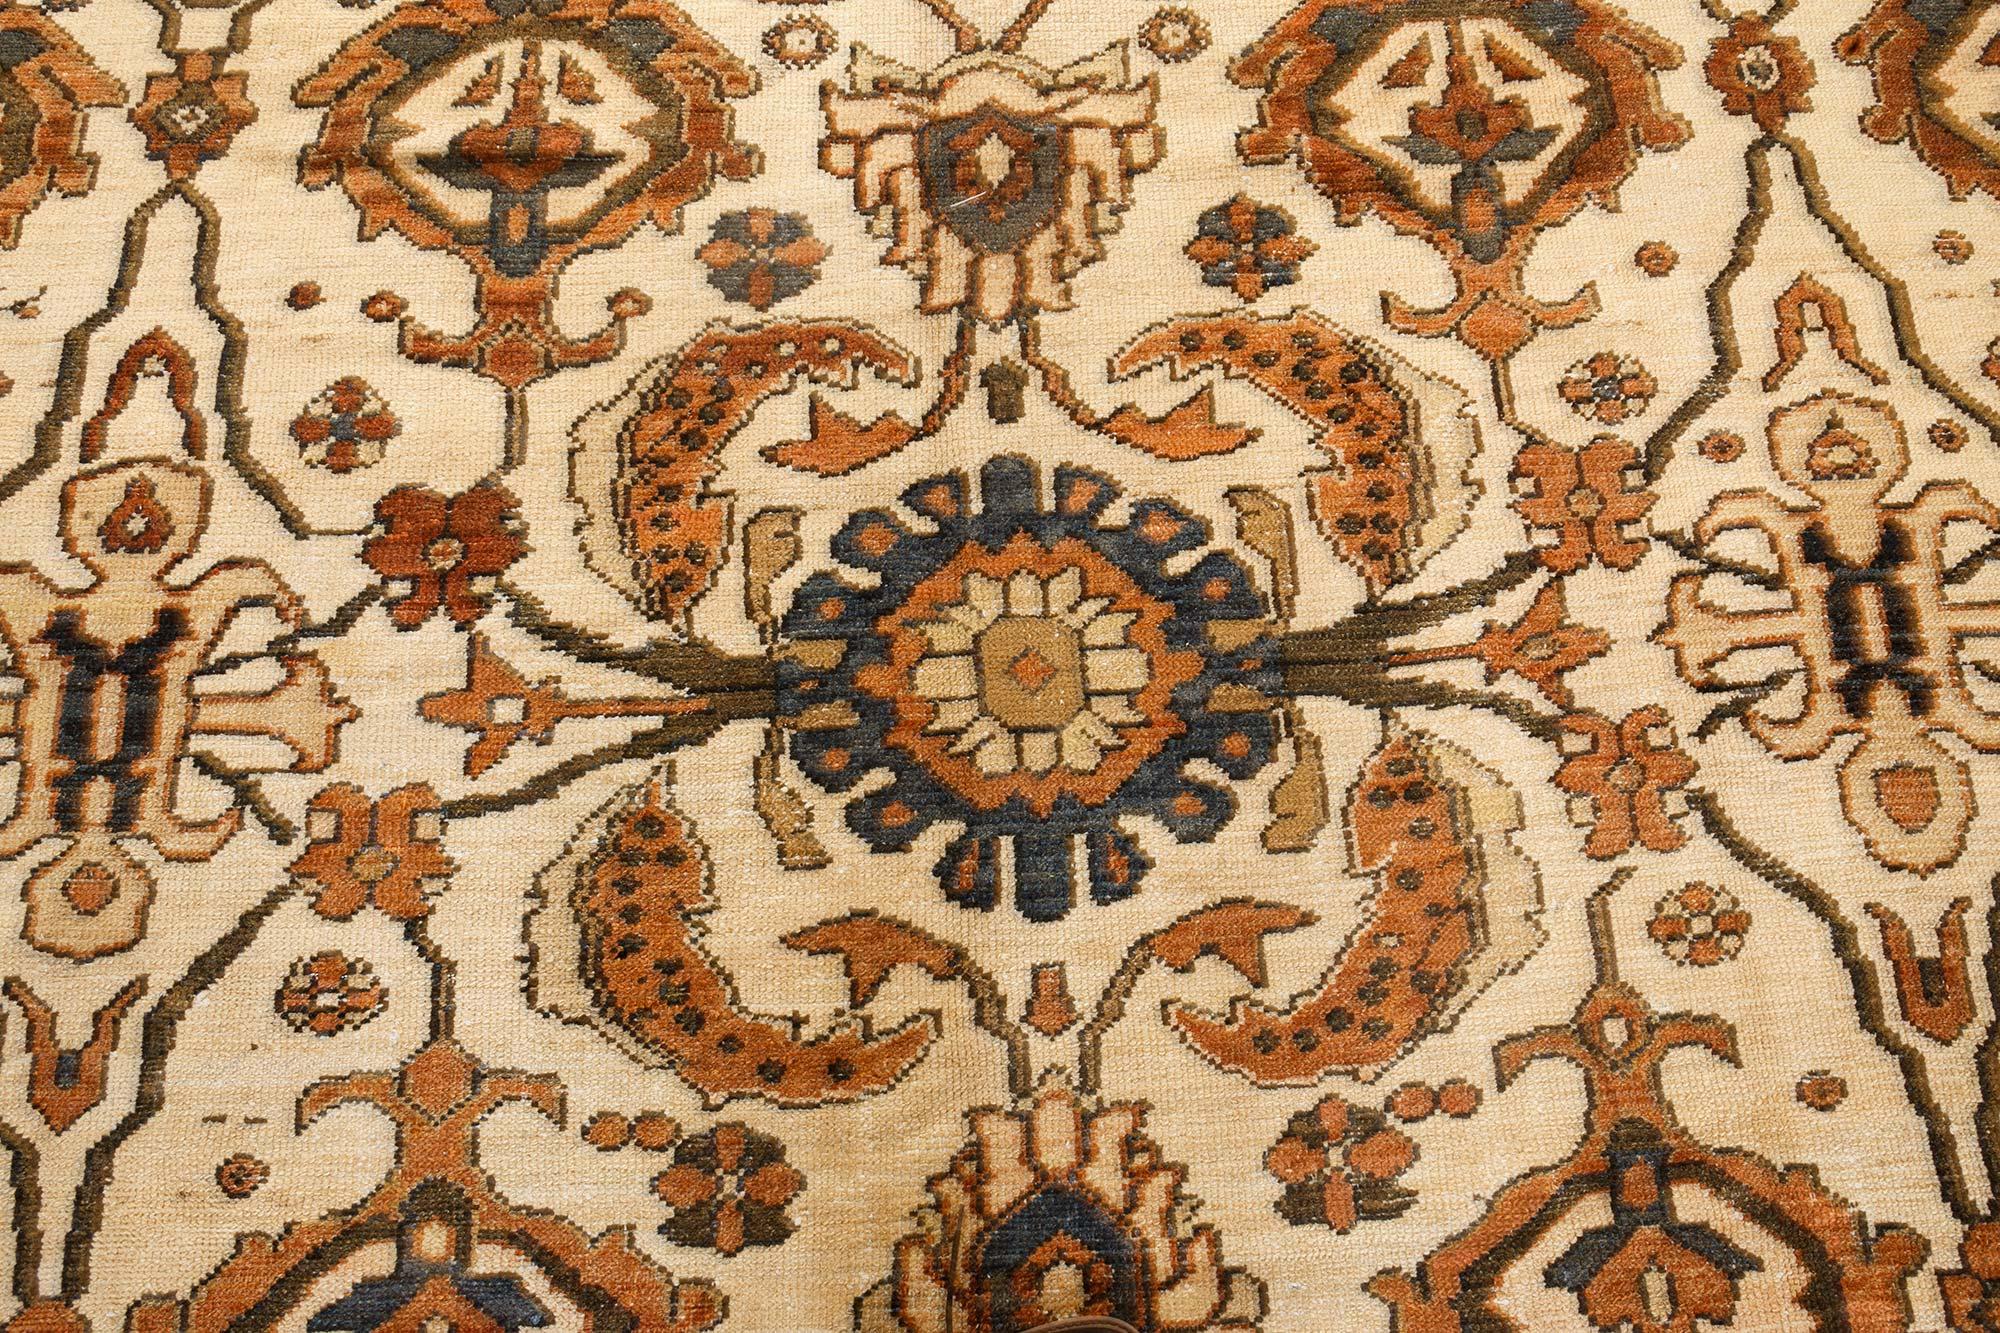 Antique Botanic Persian Sultanabad wool carpet
Size: 10'6